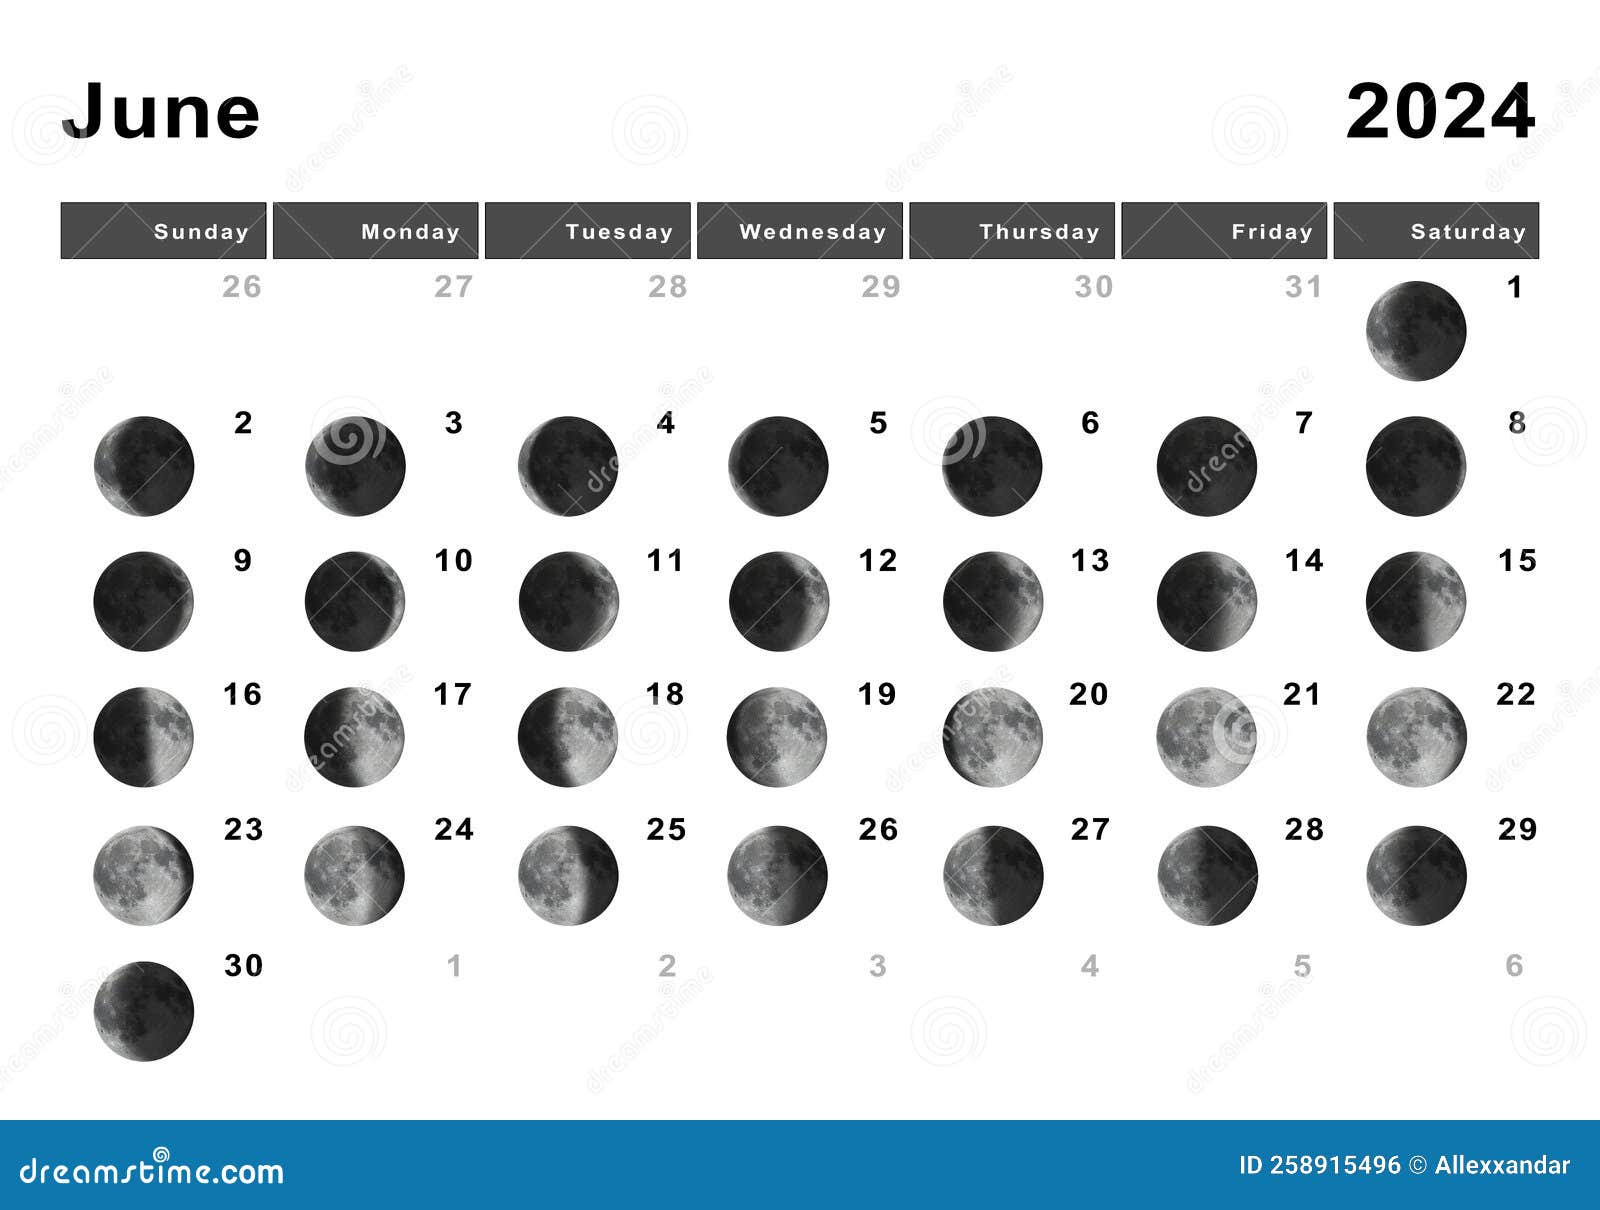 June 2024 Lunar Calendar, Moon Cycles Stock Illustration intended for Moon Phases Calendar June 2024